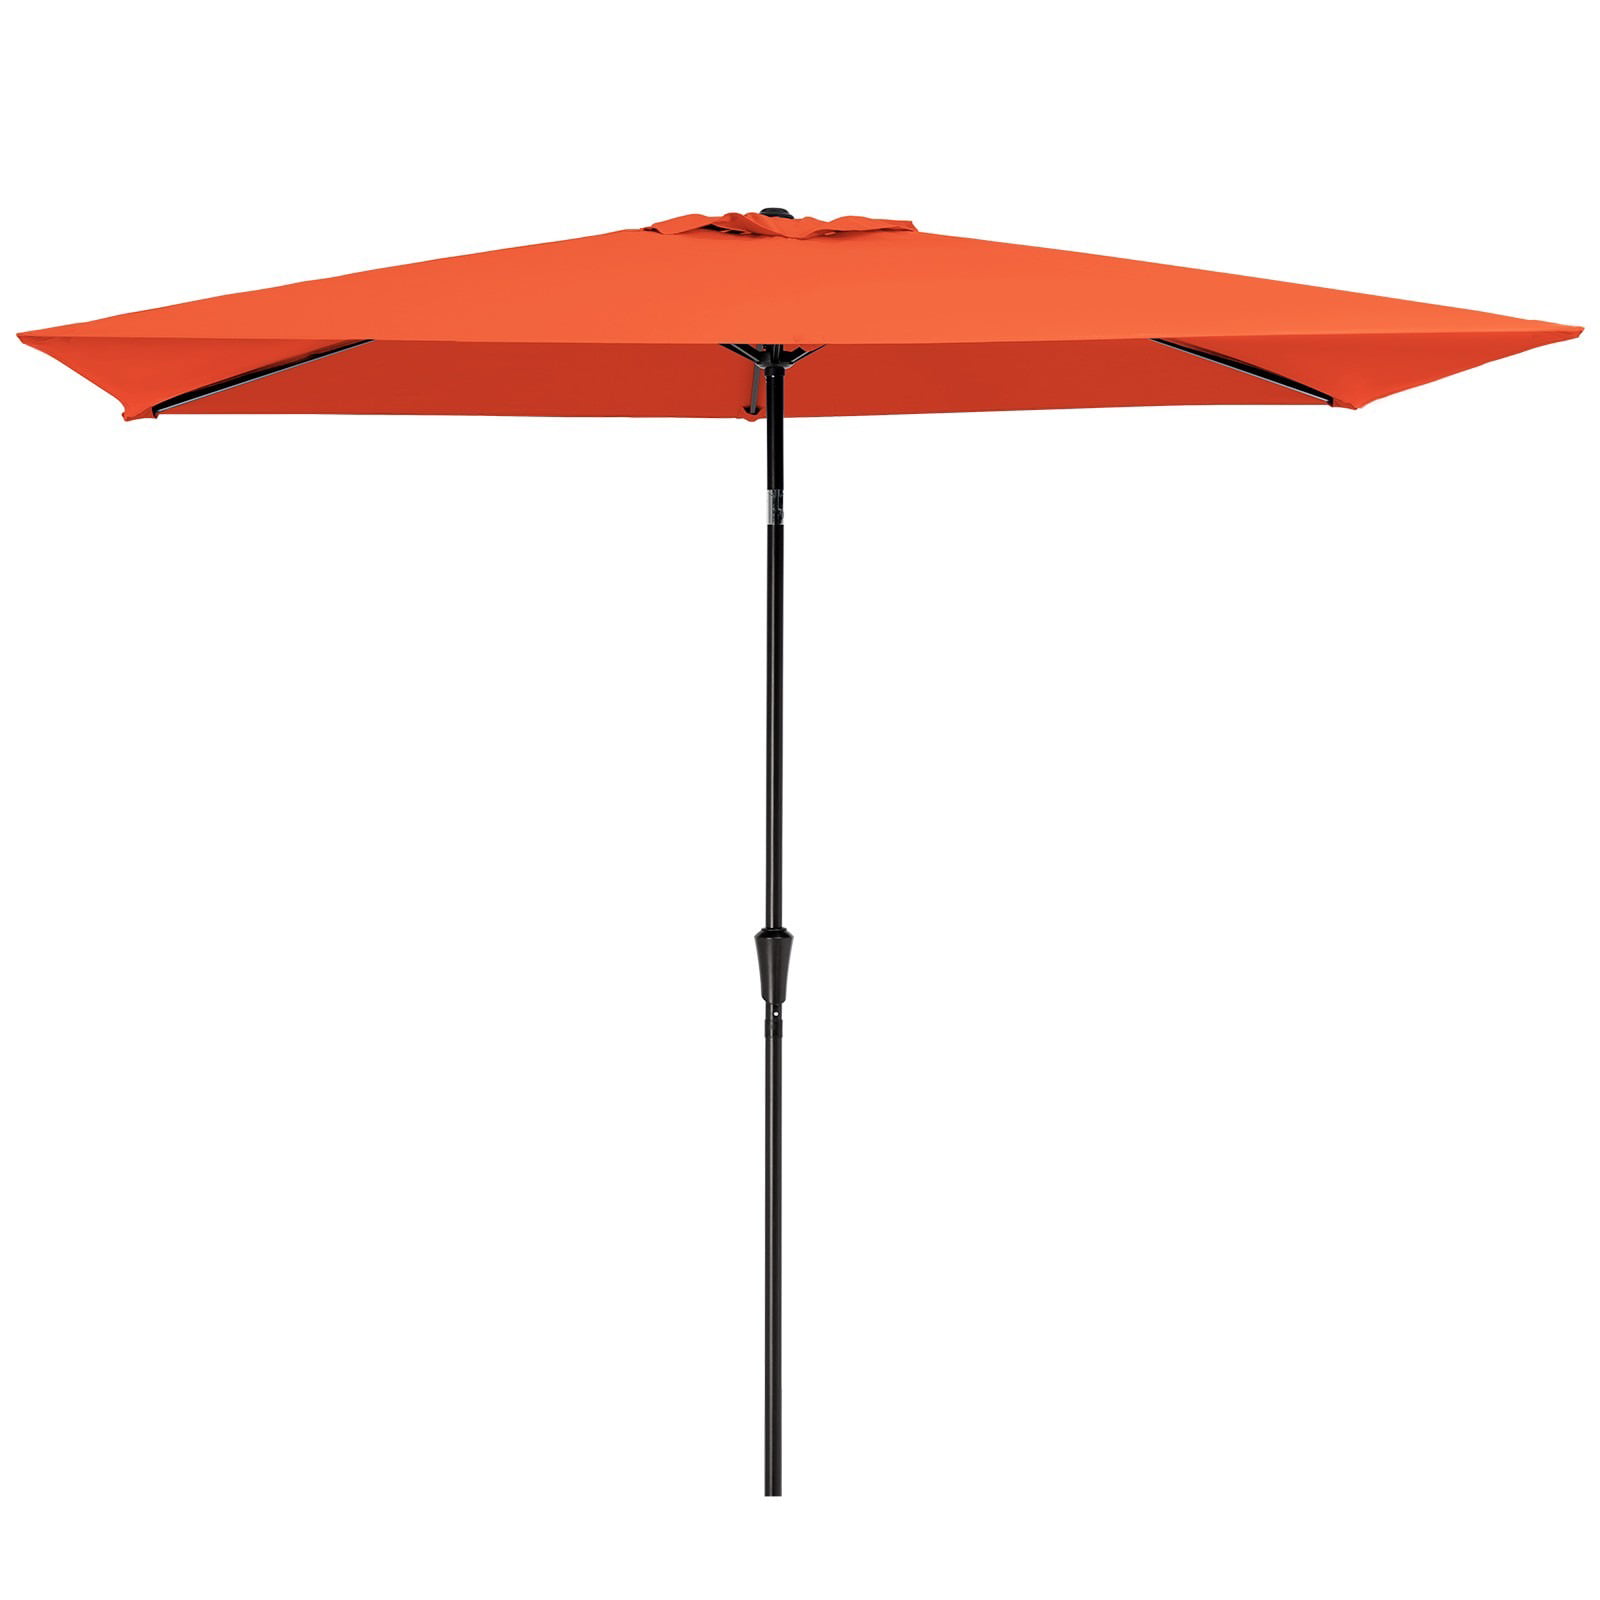 Wind Resistant UV Protected Sun Shade for Garden Lawn Deck Backyard Grey Bumblr Rectangular Patio Umbrella 8x10ft Outdoor Market Table umbrella with Crank 